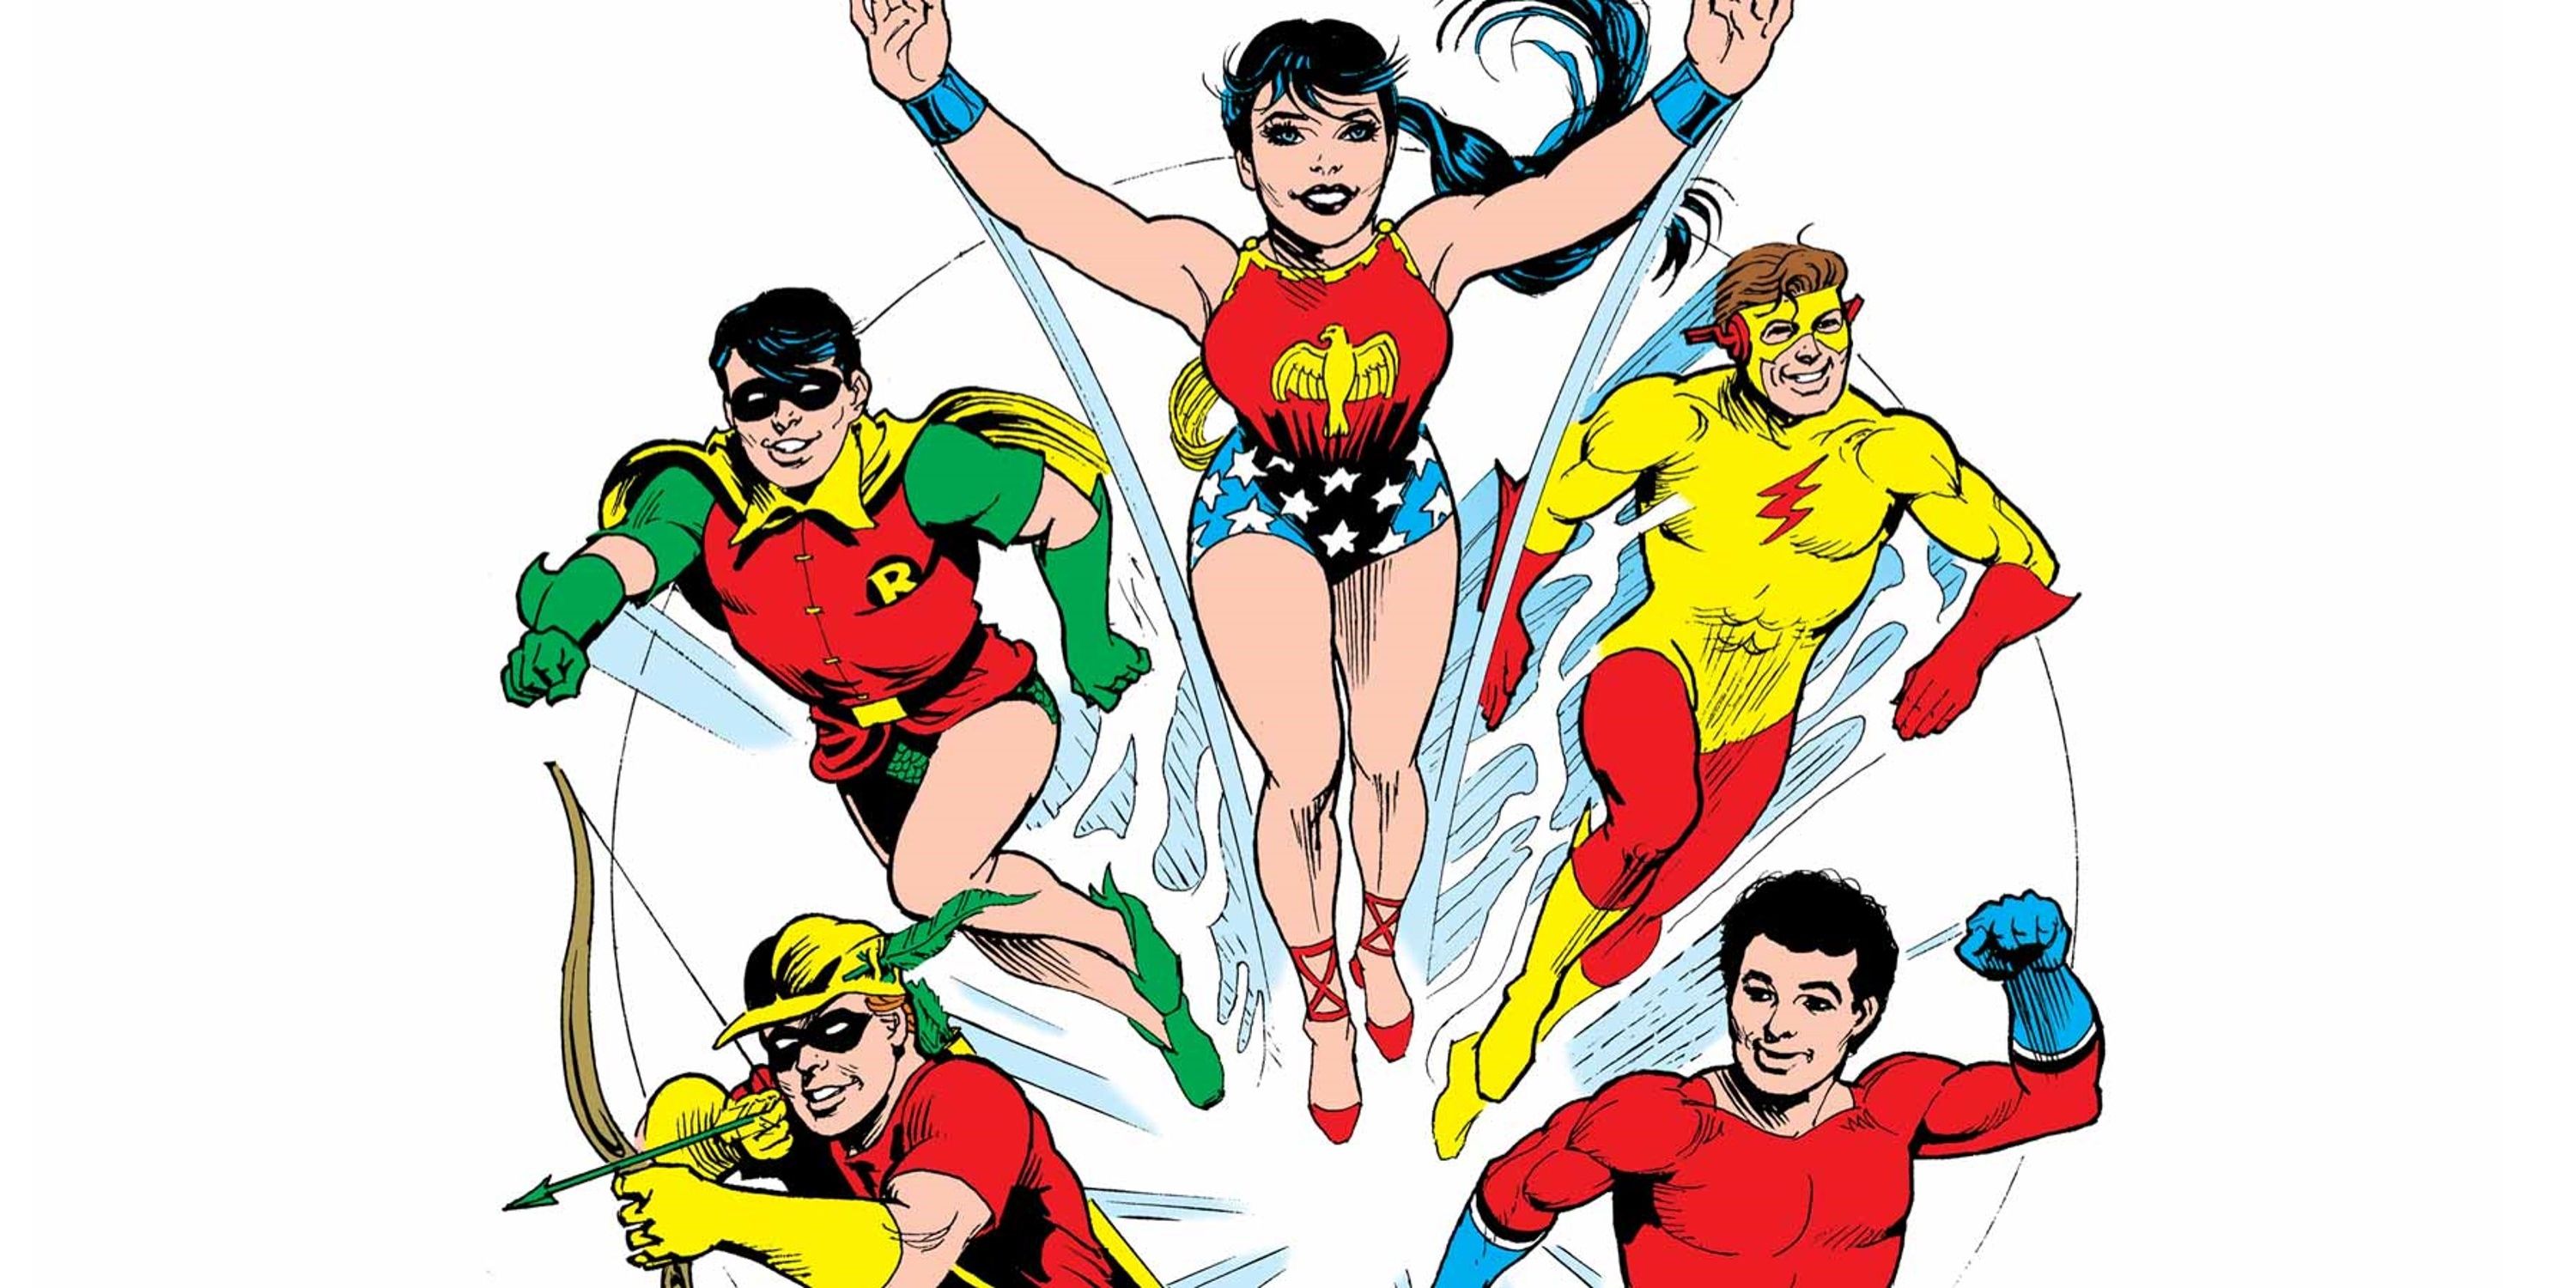 Os Jovens Titãs Originais da DC Comics: Donna Troy (Garota Maravilha) Dick Grayson (Robin) Wally West (Kid Flash) Roy Harper (Speedy) Garth (Aqualad)